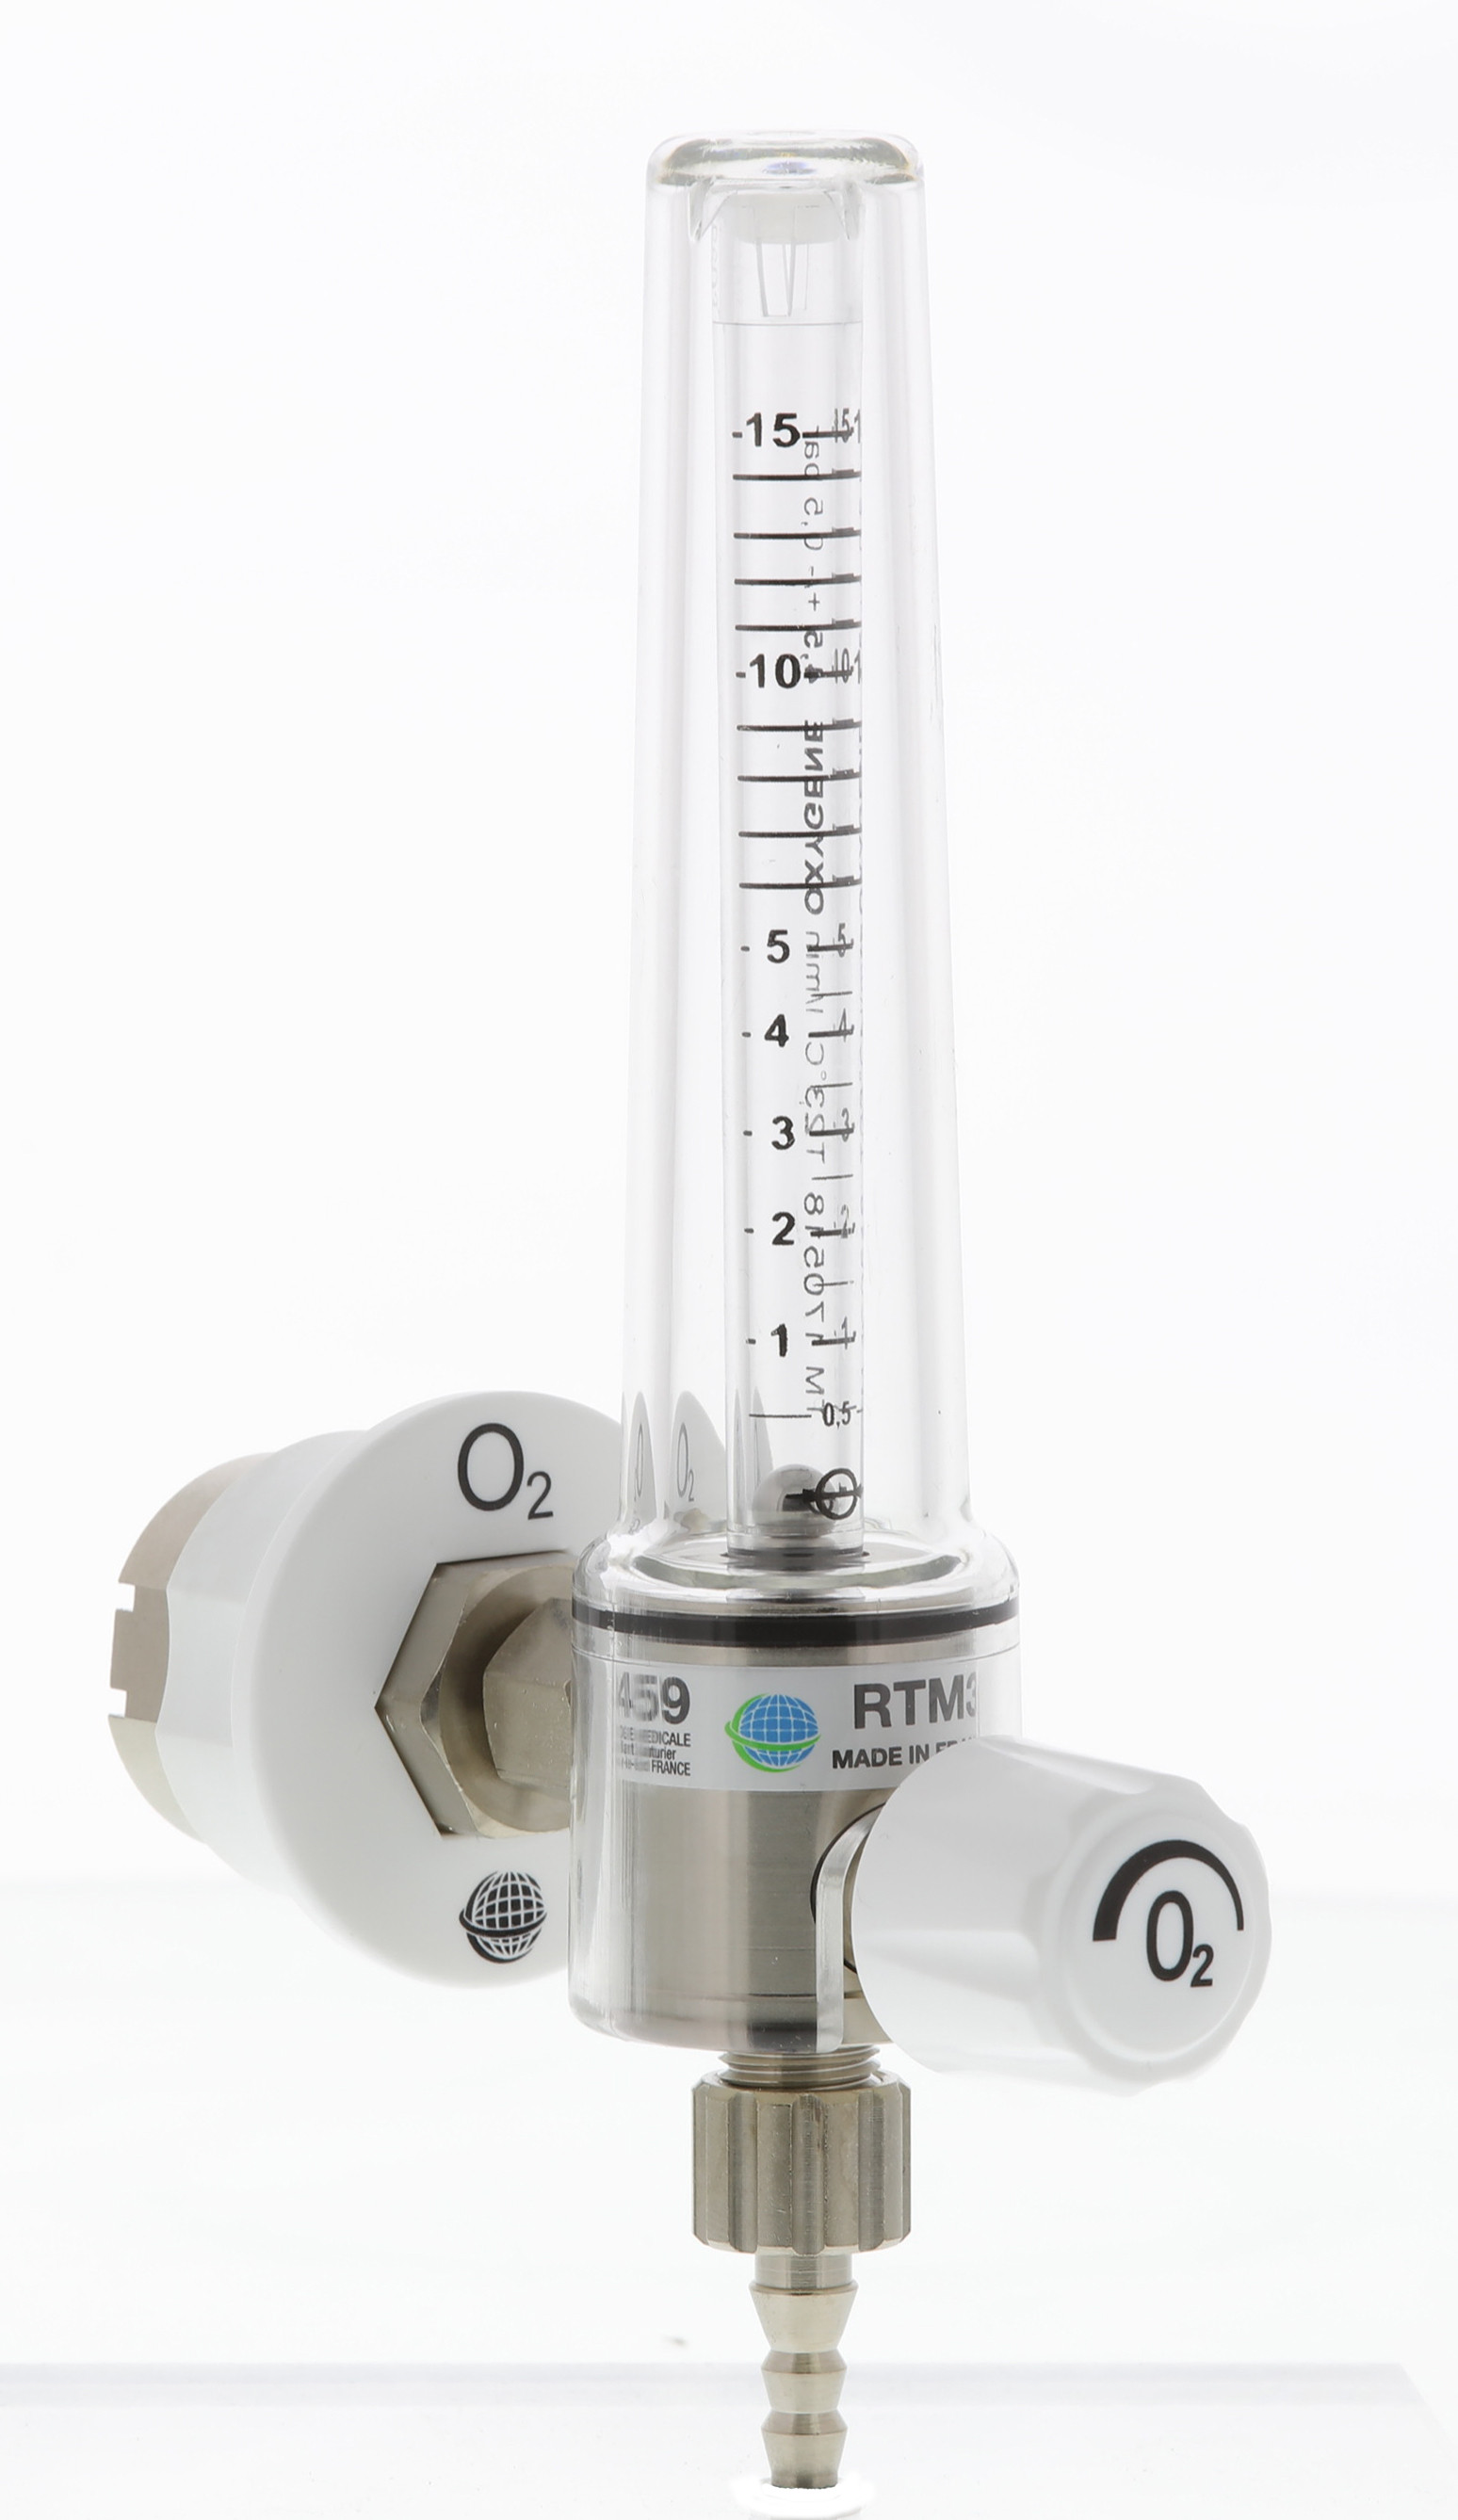 LZQ-7 3-30 LPM Tube Type Acylic Flowmeter Gas 8mm Hose Fitting Oxygen Flowmeter Regulator Flow Meter Pack of 1 